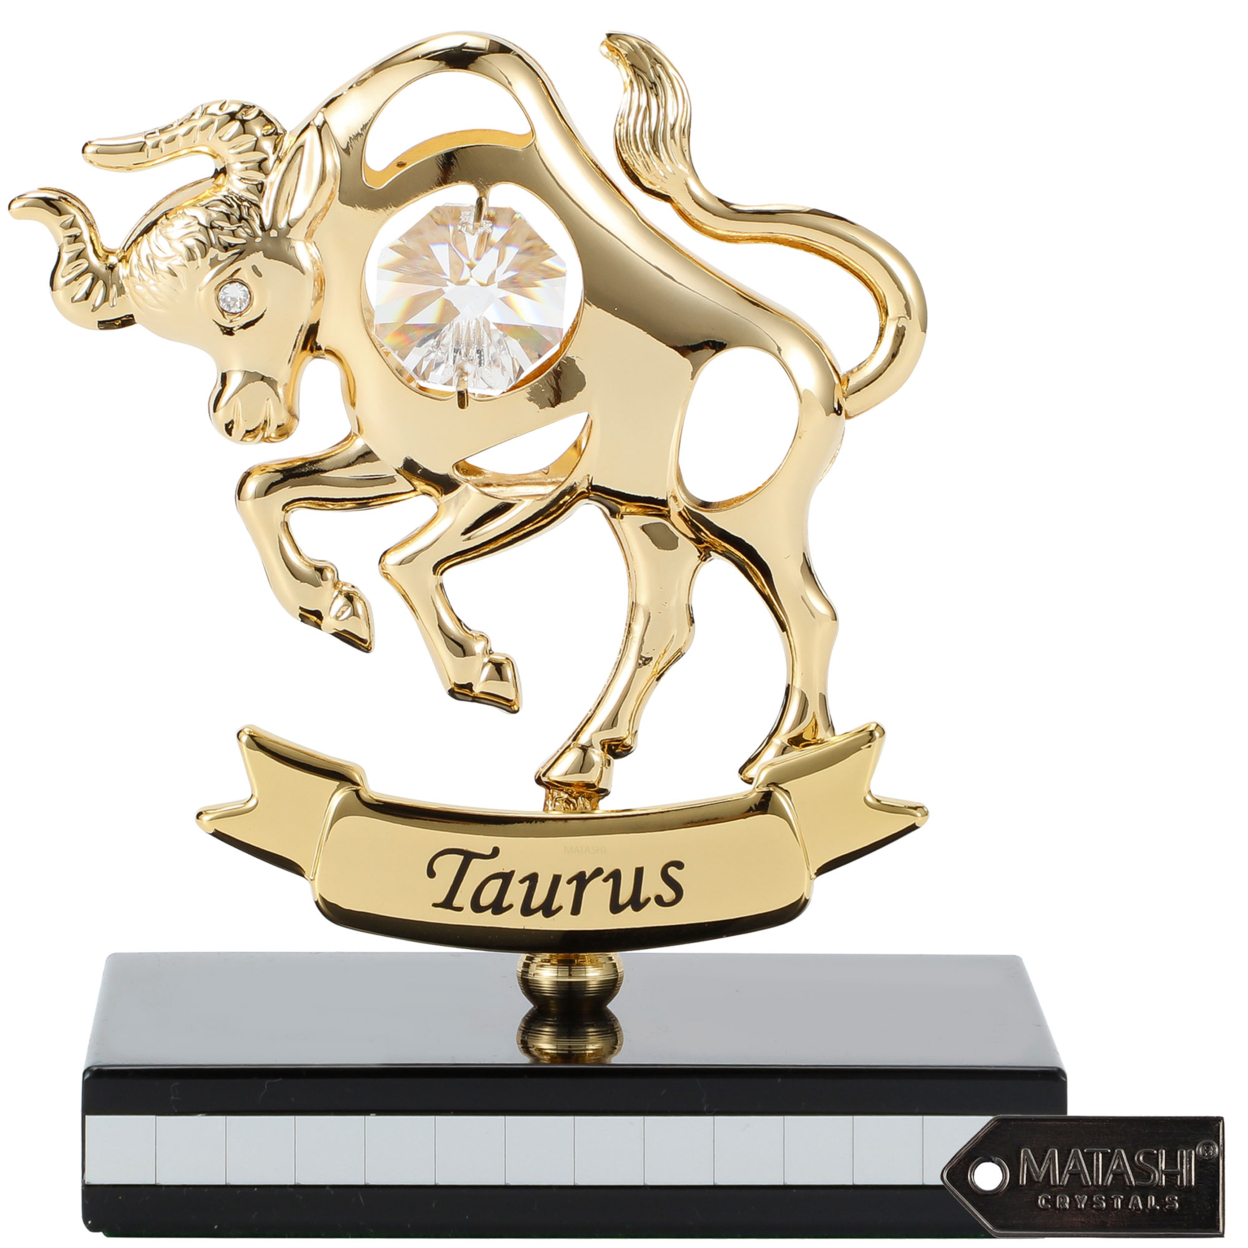 Matashi 24K Gold Plated Zodiac Astrological Sign Taurus Figurine Statuette On Stand W/ Crystals Birthday Gift For Mom Girlfriend Boyfriend